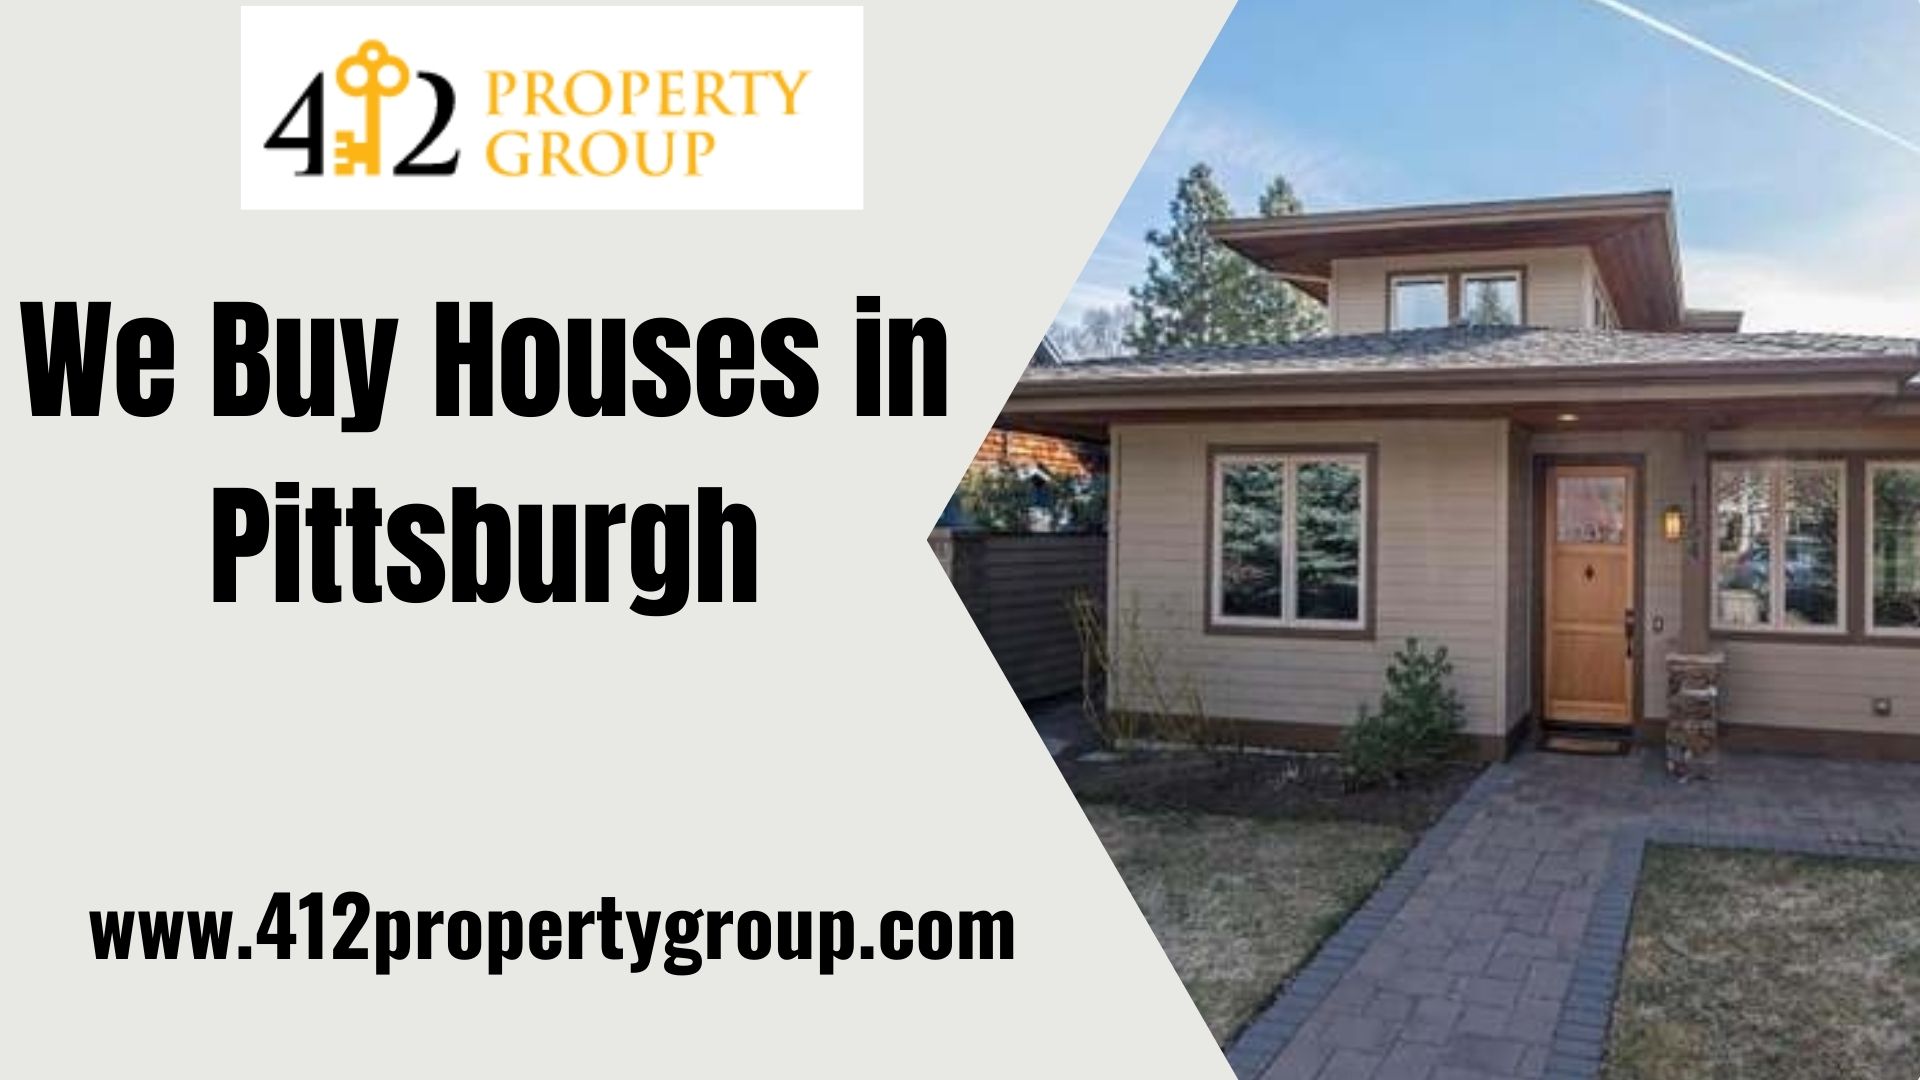 We Buy Houses in Pittsburgh – www.412propertygroup.com